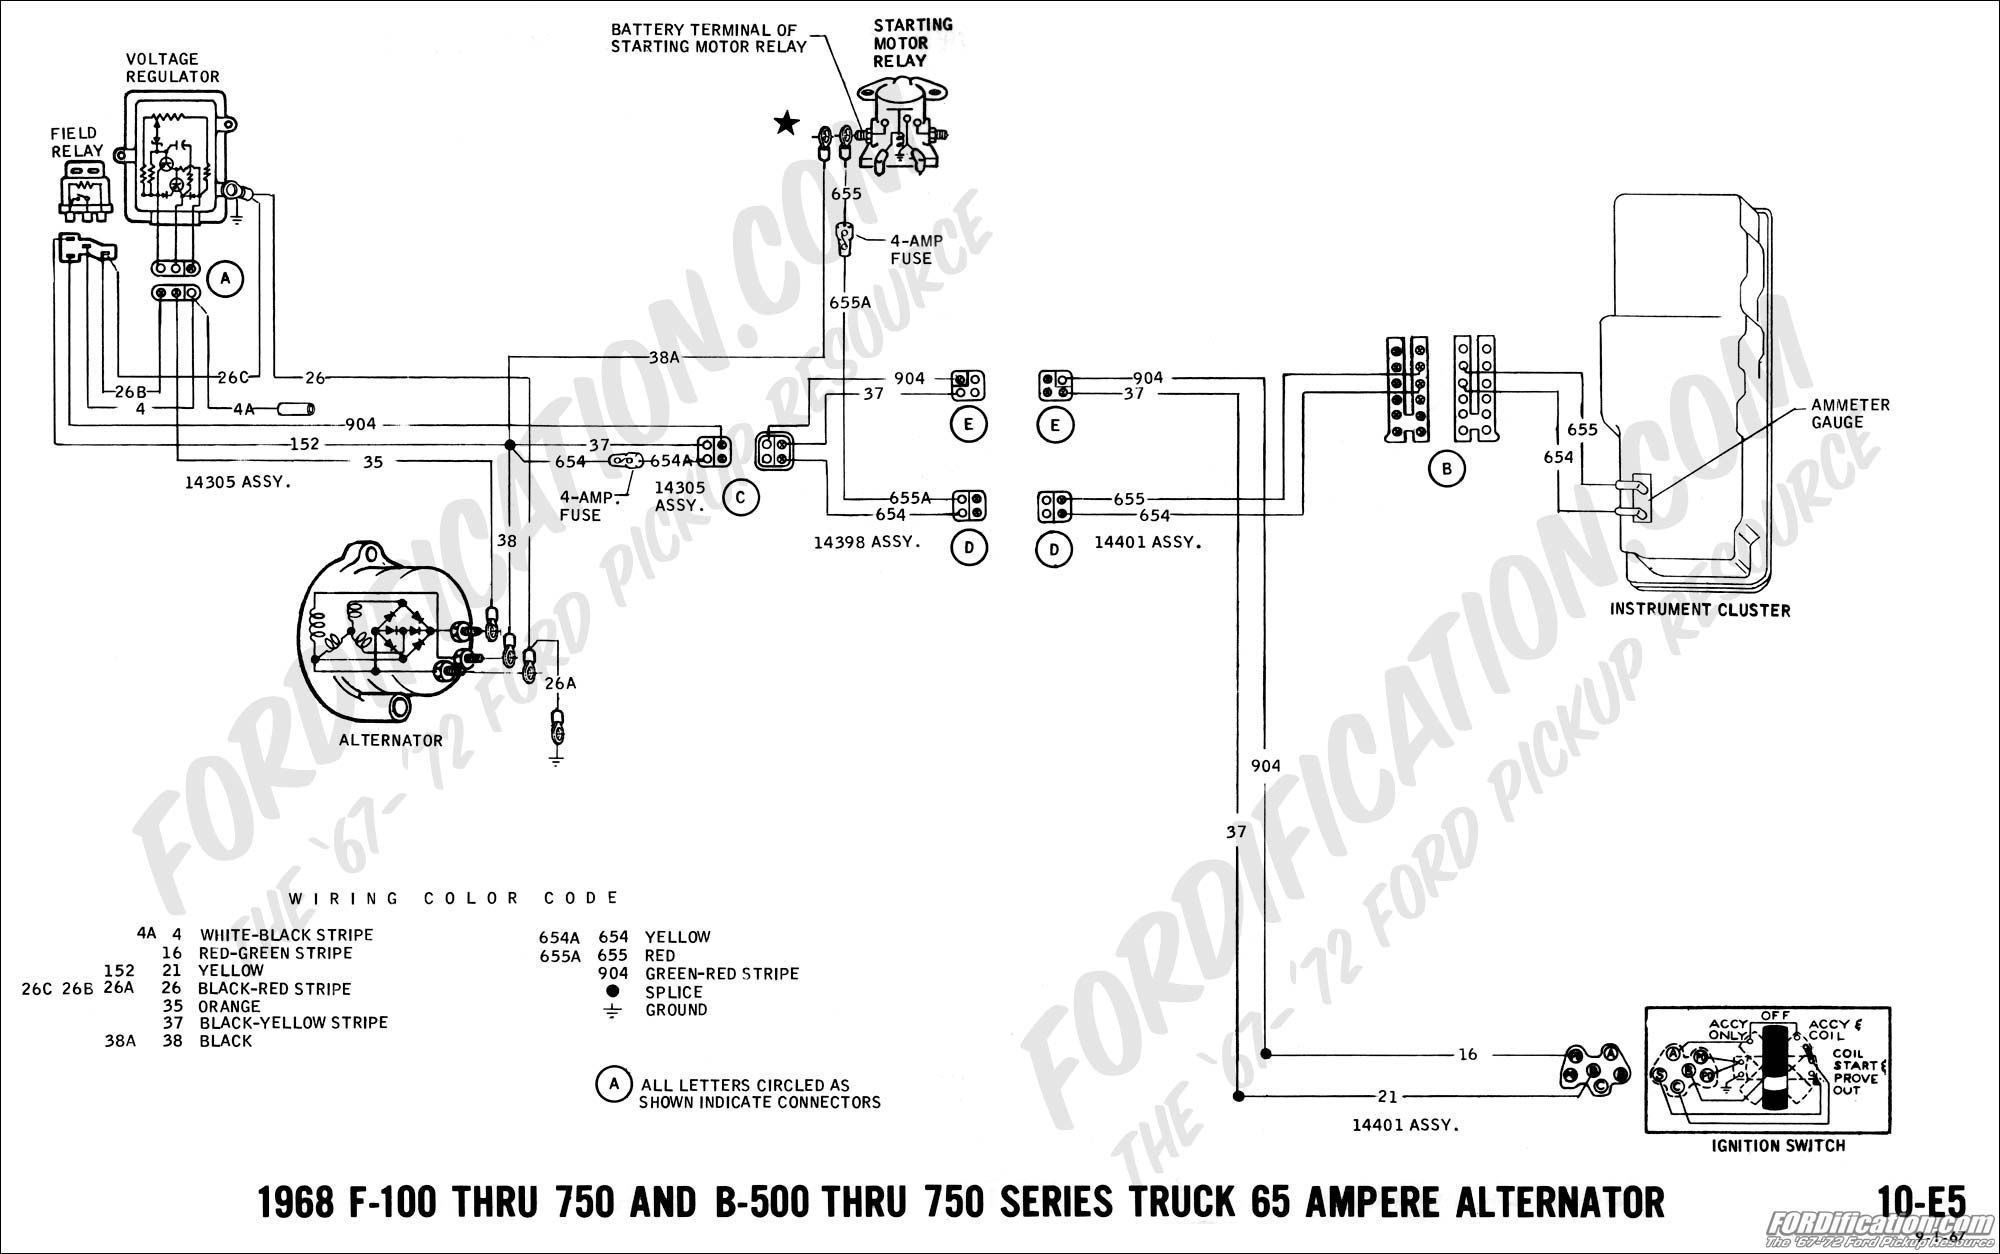 Ford Alternator Wiring Diagram Internal Regulator Unique Simple - Ford Alternator Wiring Diagram Internal Regulator